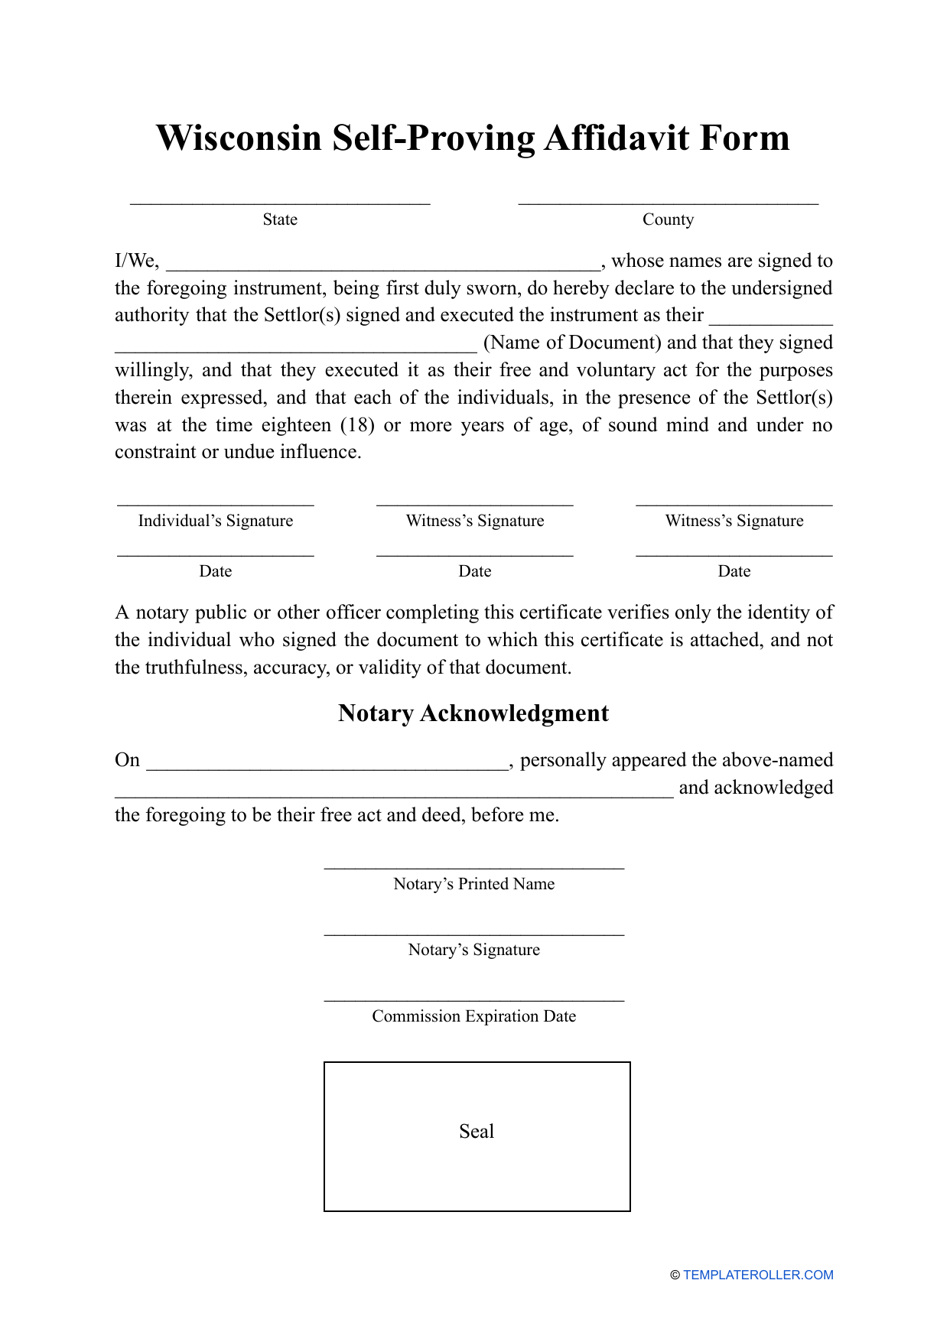 Self-proving Affidavit Form - Wisconsin, Page 1